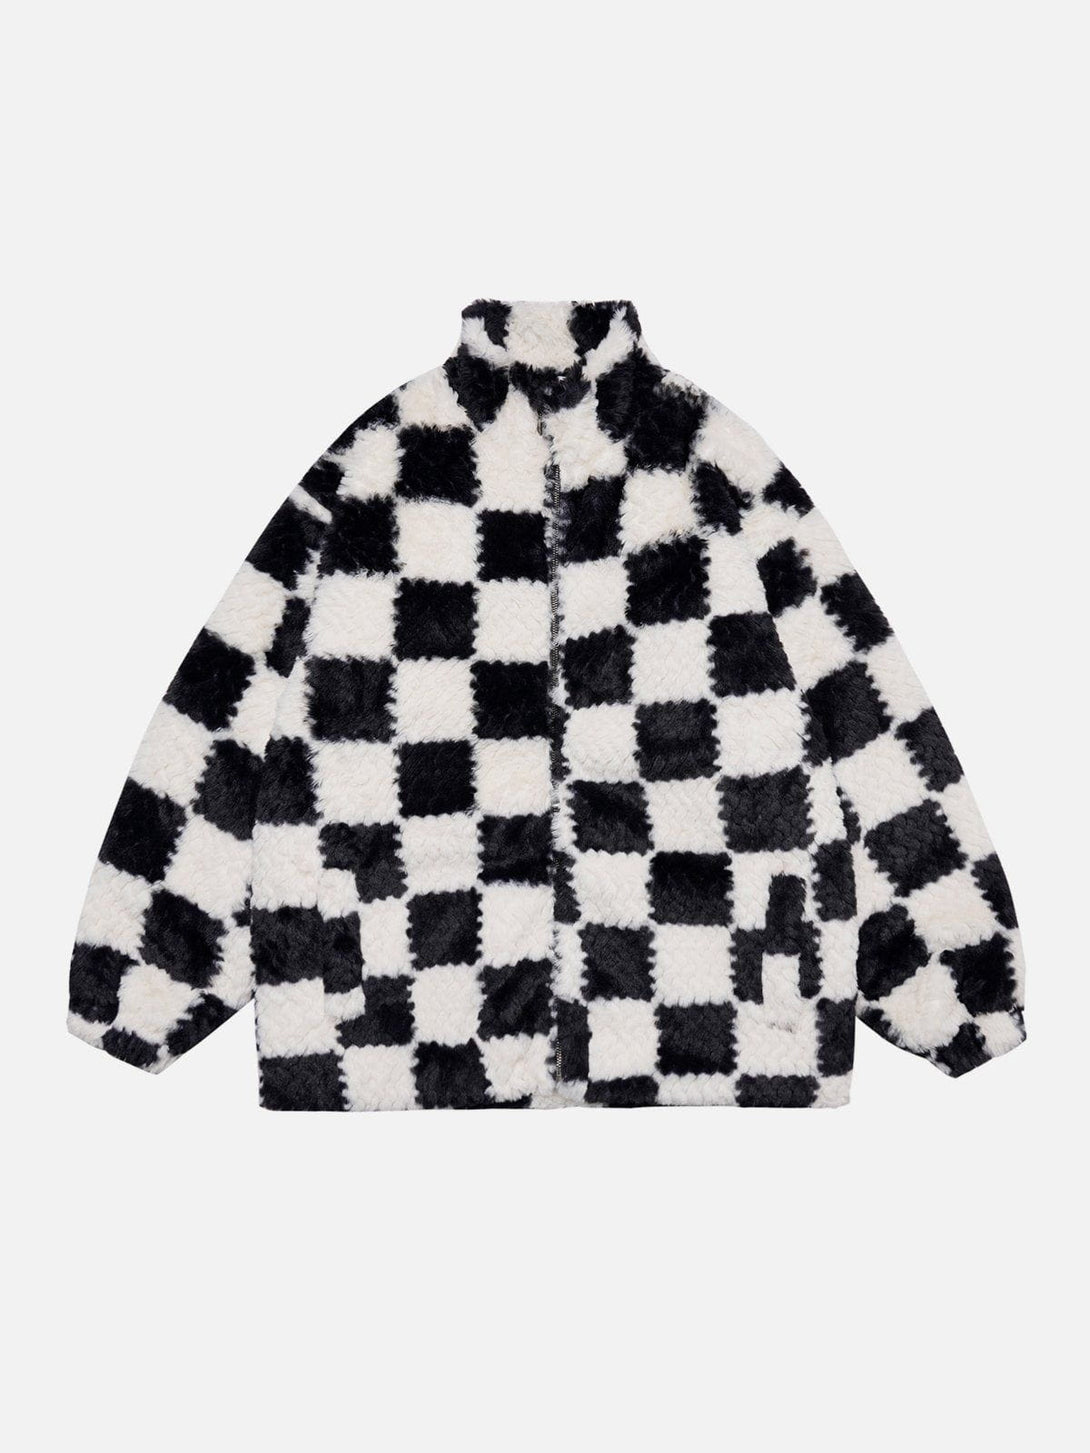 Majesda® - Contrast Checkerboard Sherpa Coat outfit ideas streetwear fashion